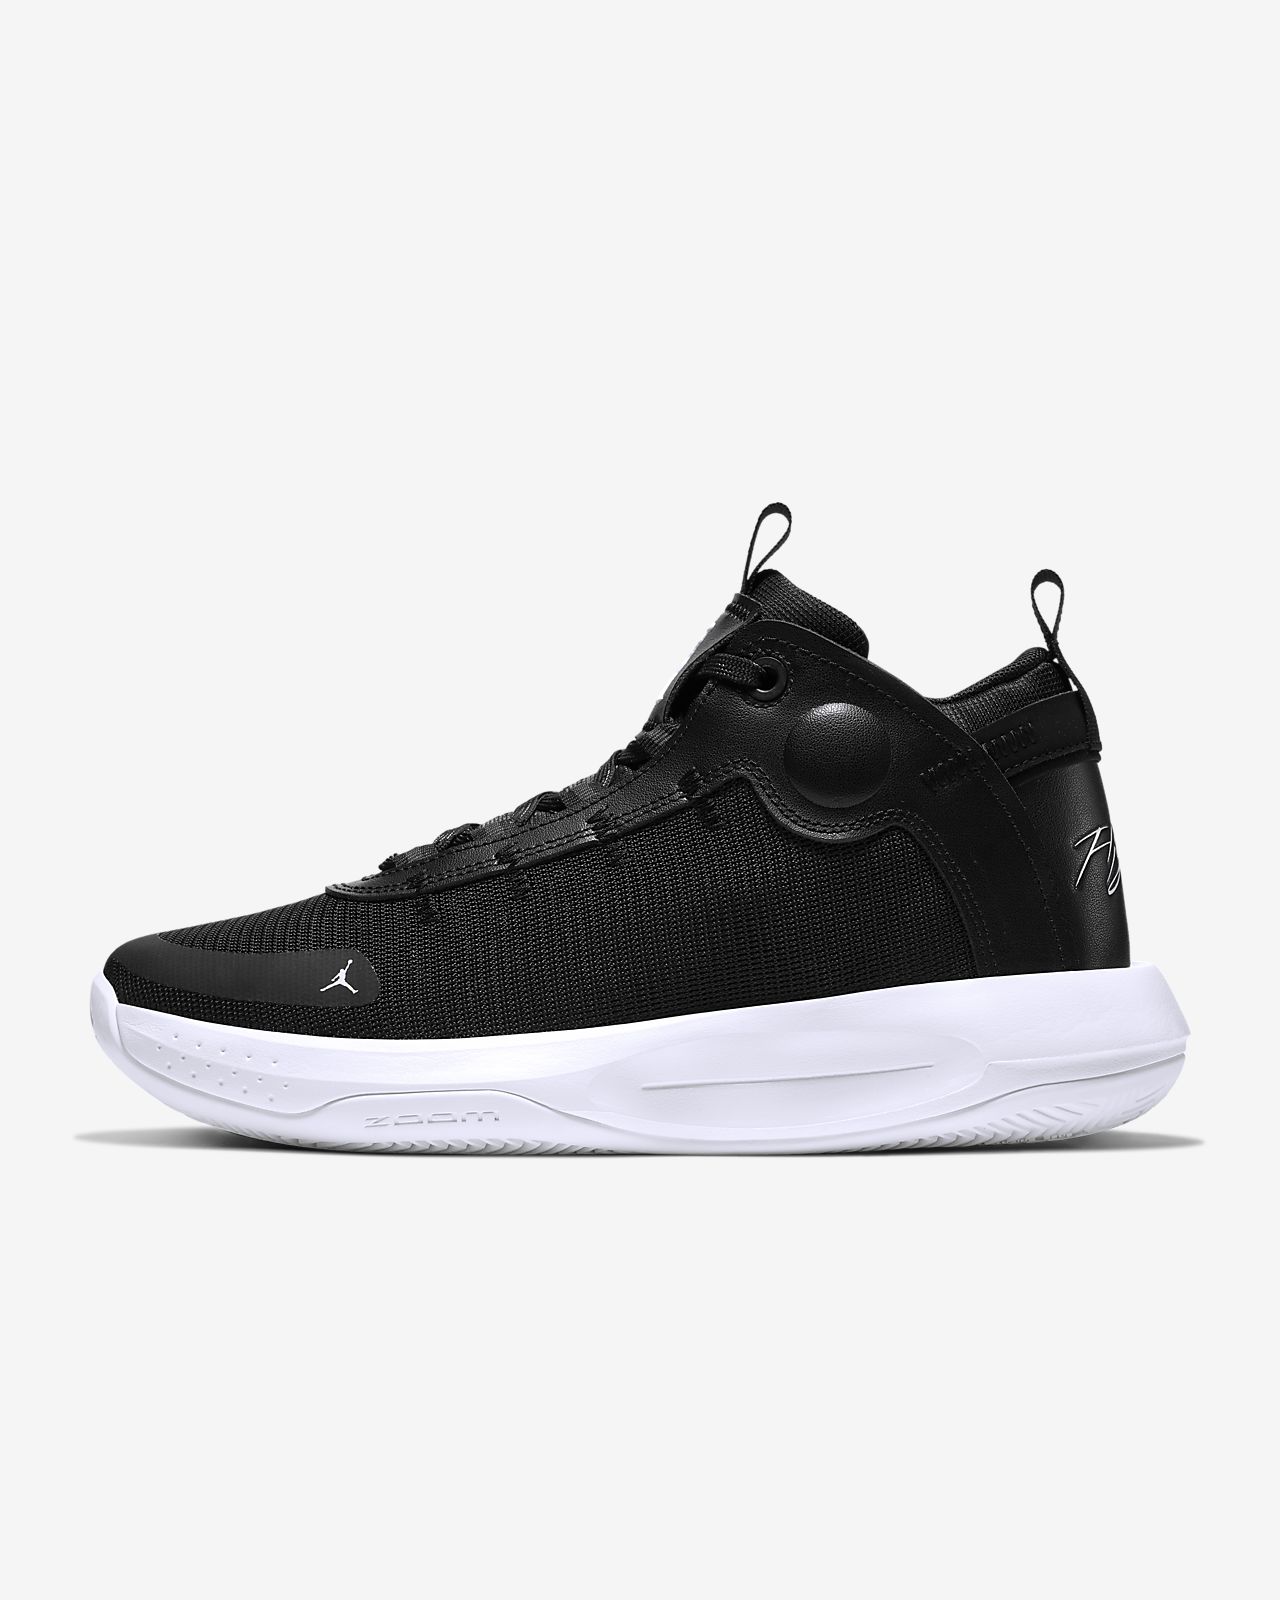 Nike Air Jordan 9 kopen